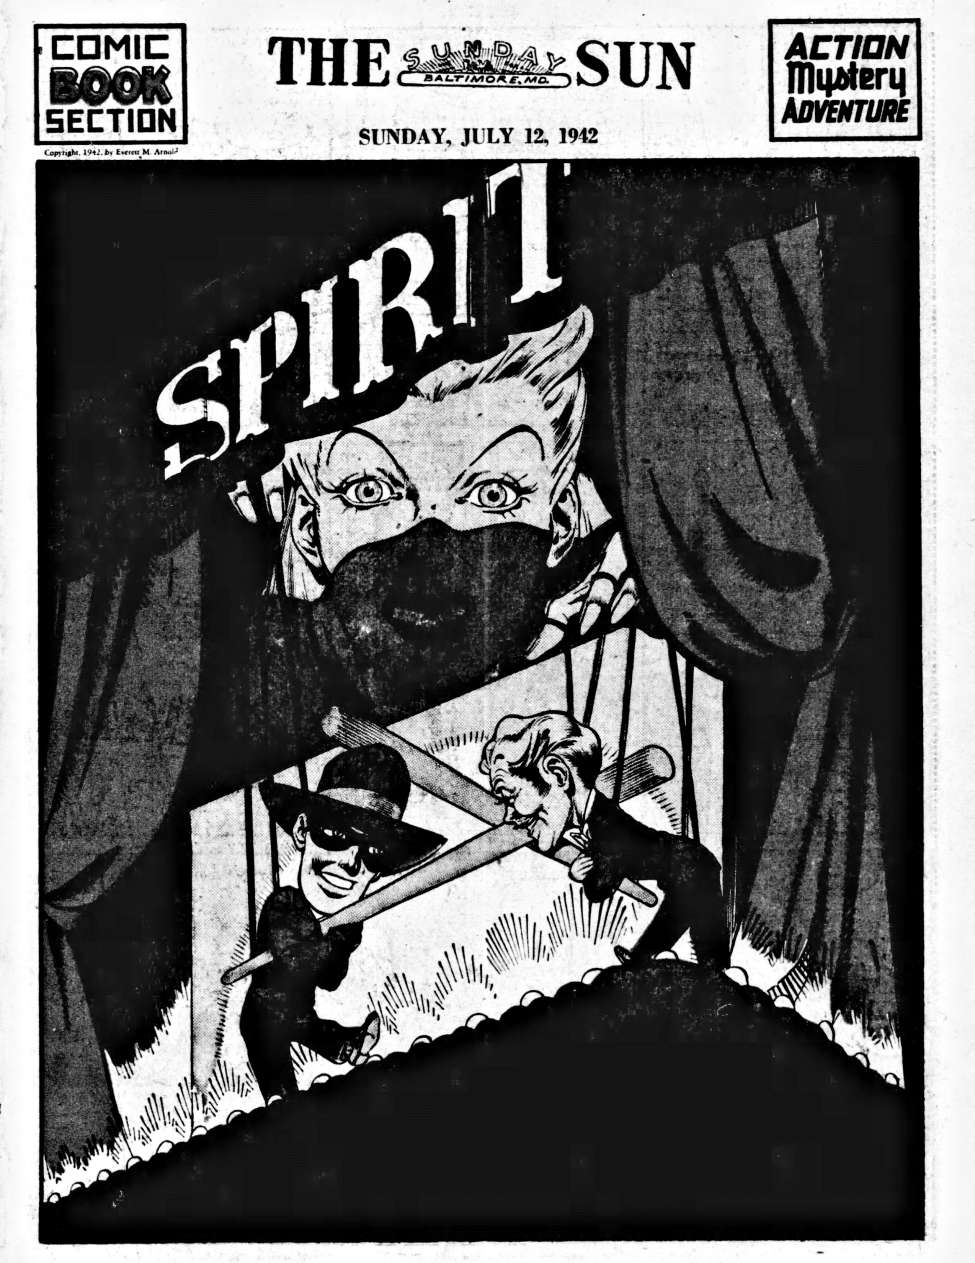 Comic Book Cover For The Spirit (1942-07-12) - Baltimore Sun (b/w)